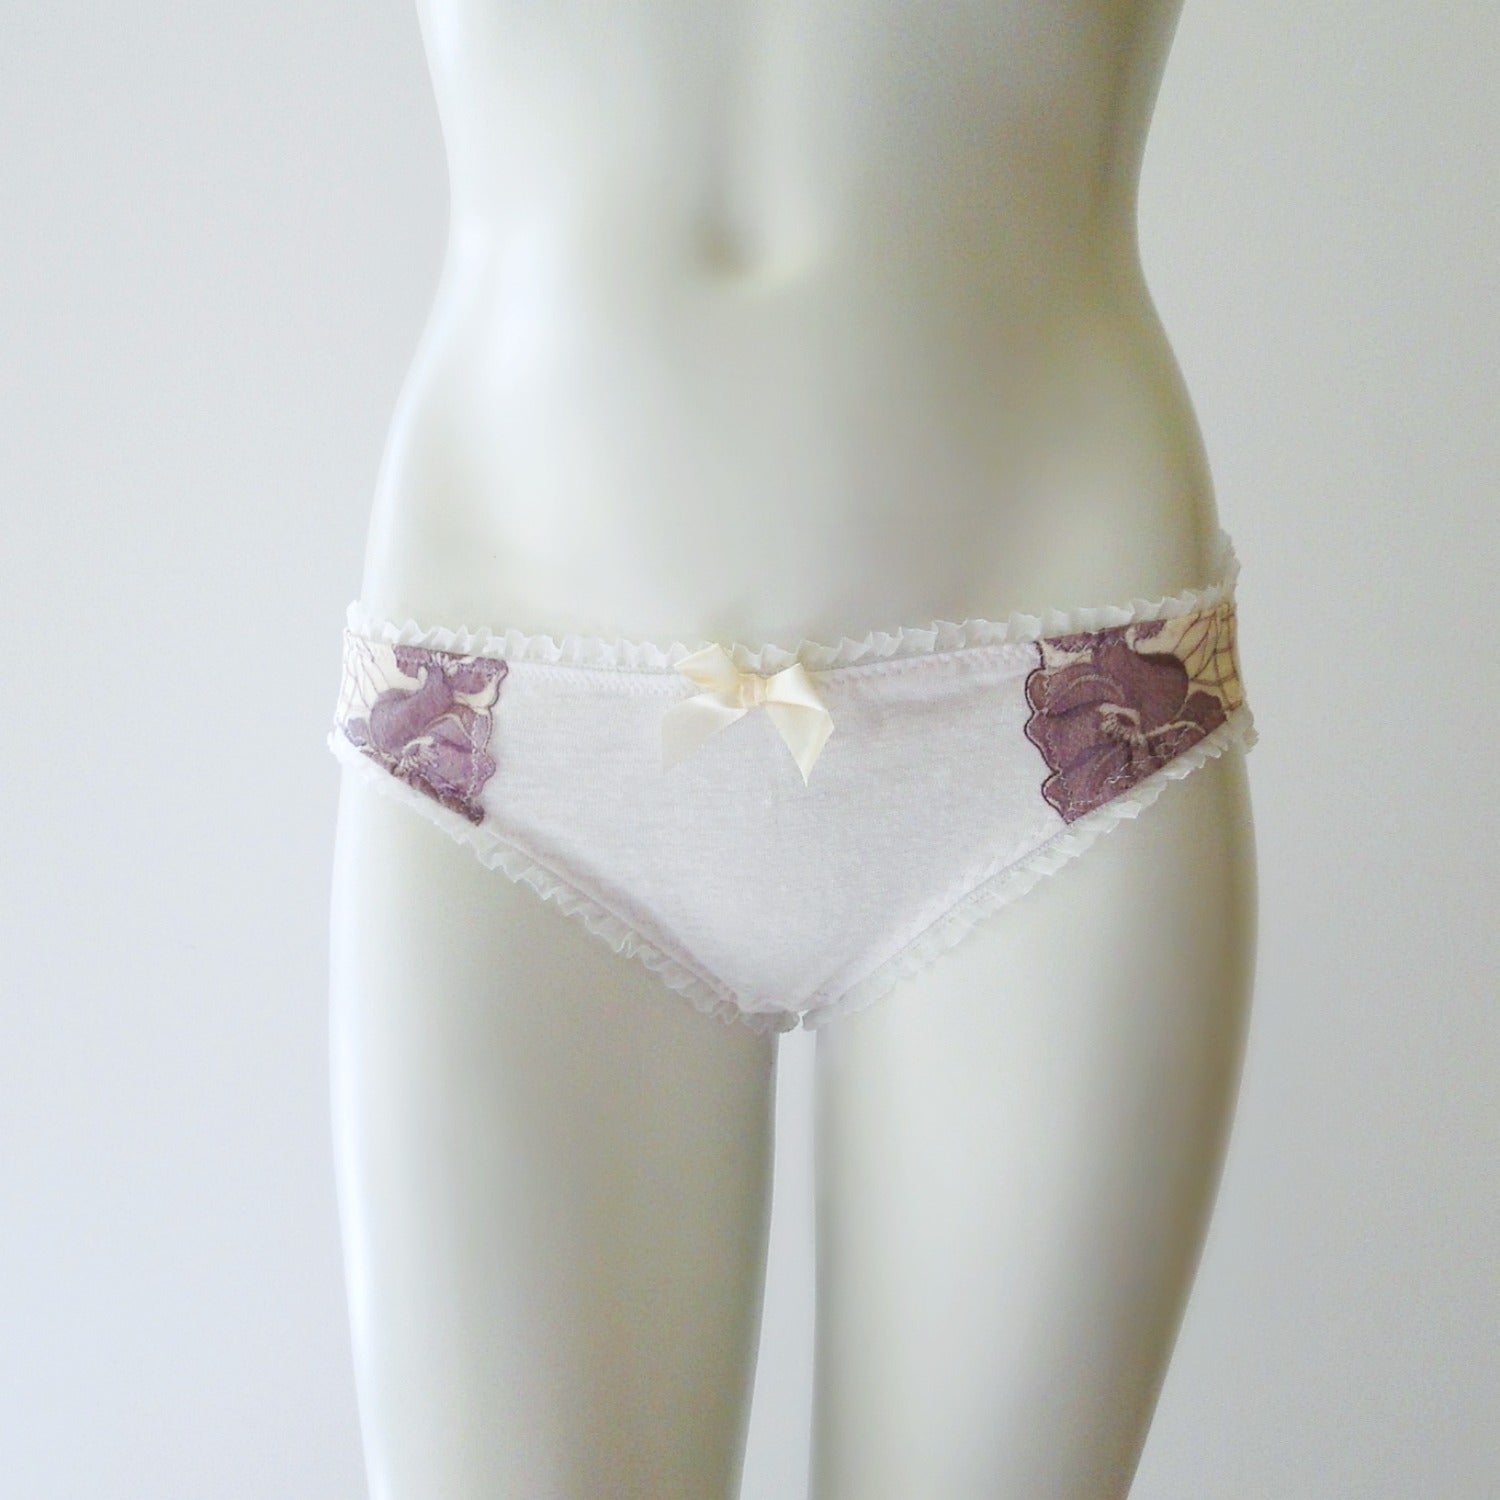 Women cloth underwear vintage style soft briefs panties nylon lacy LL size  3 pcs